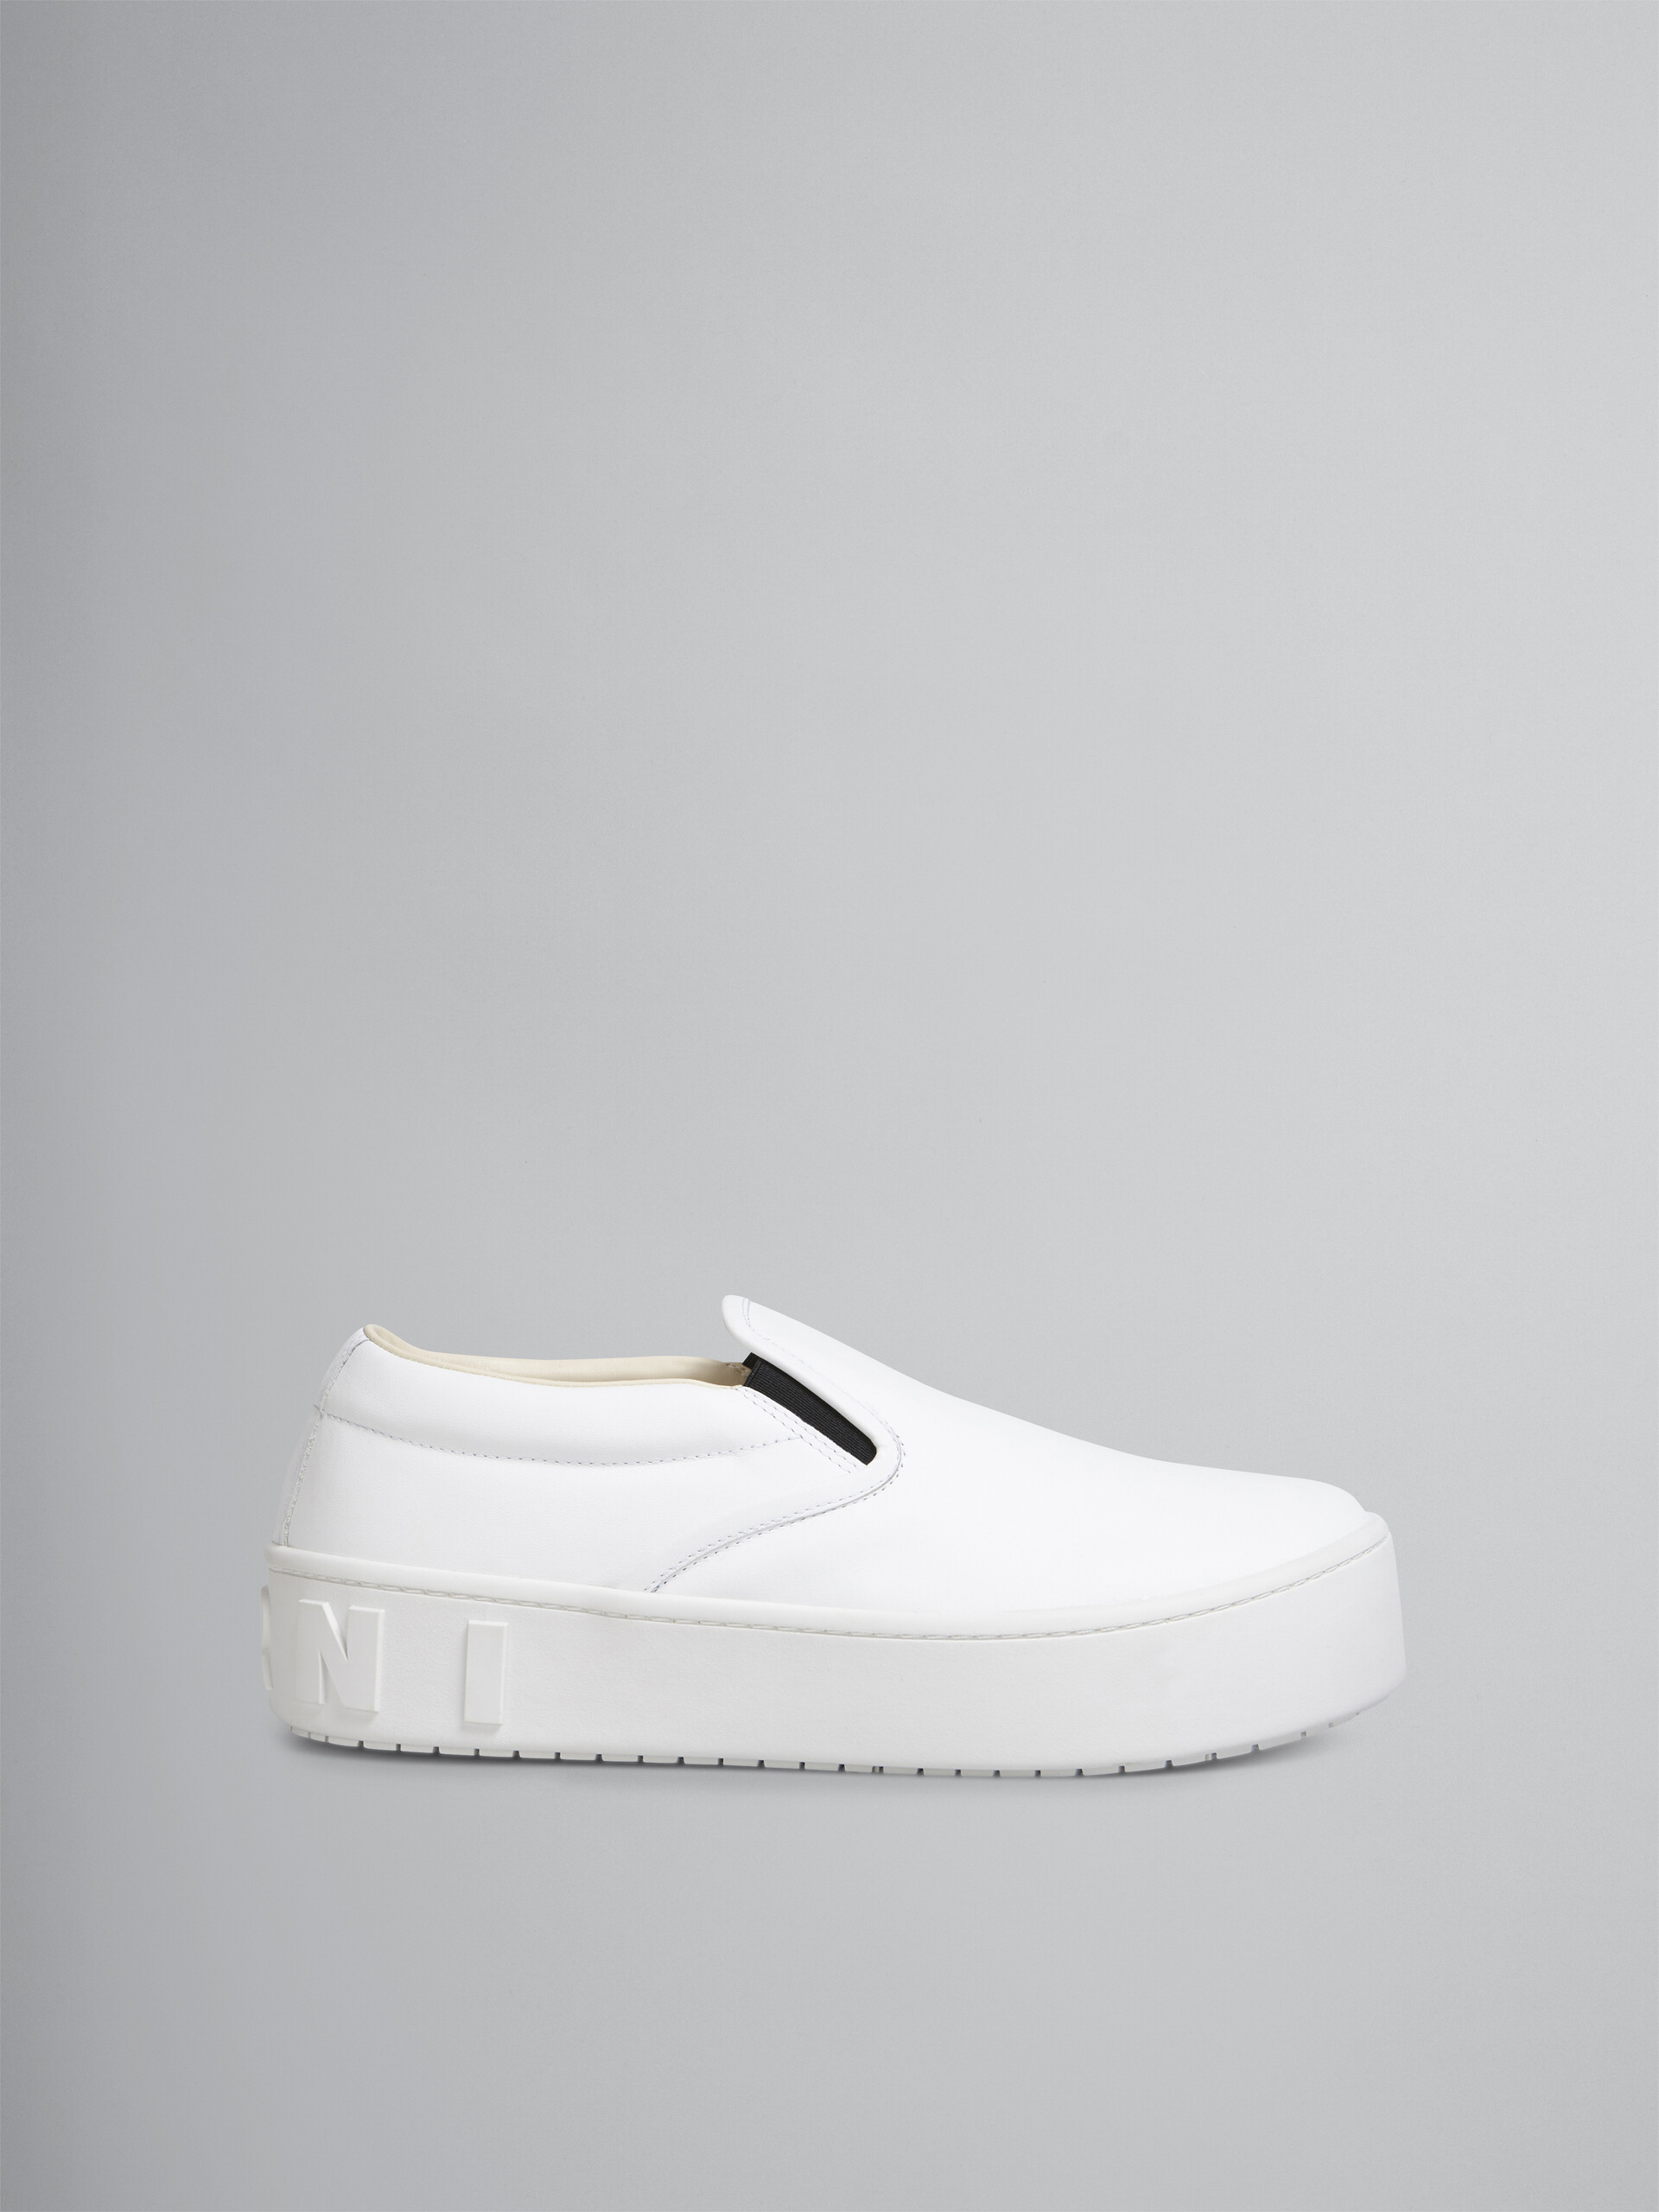 Sneakers en cuir de veau blanc avec grand logo Marni en relief - Sneakers - Image 1